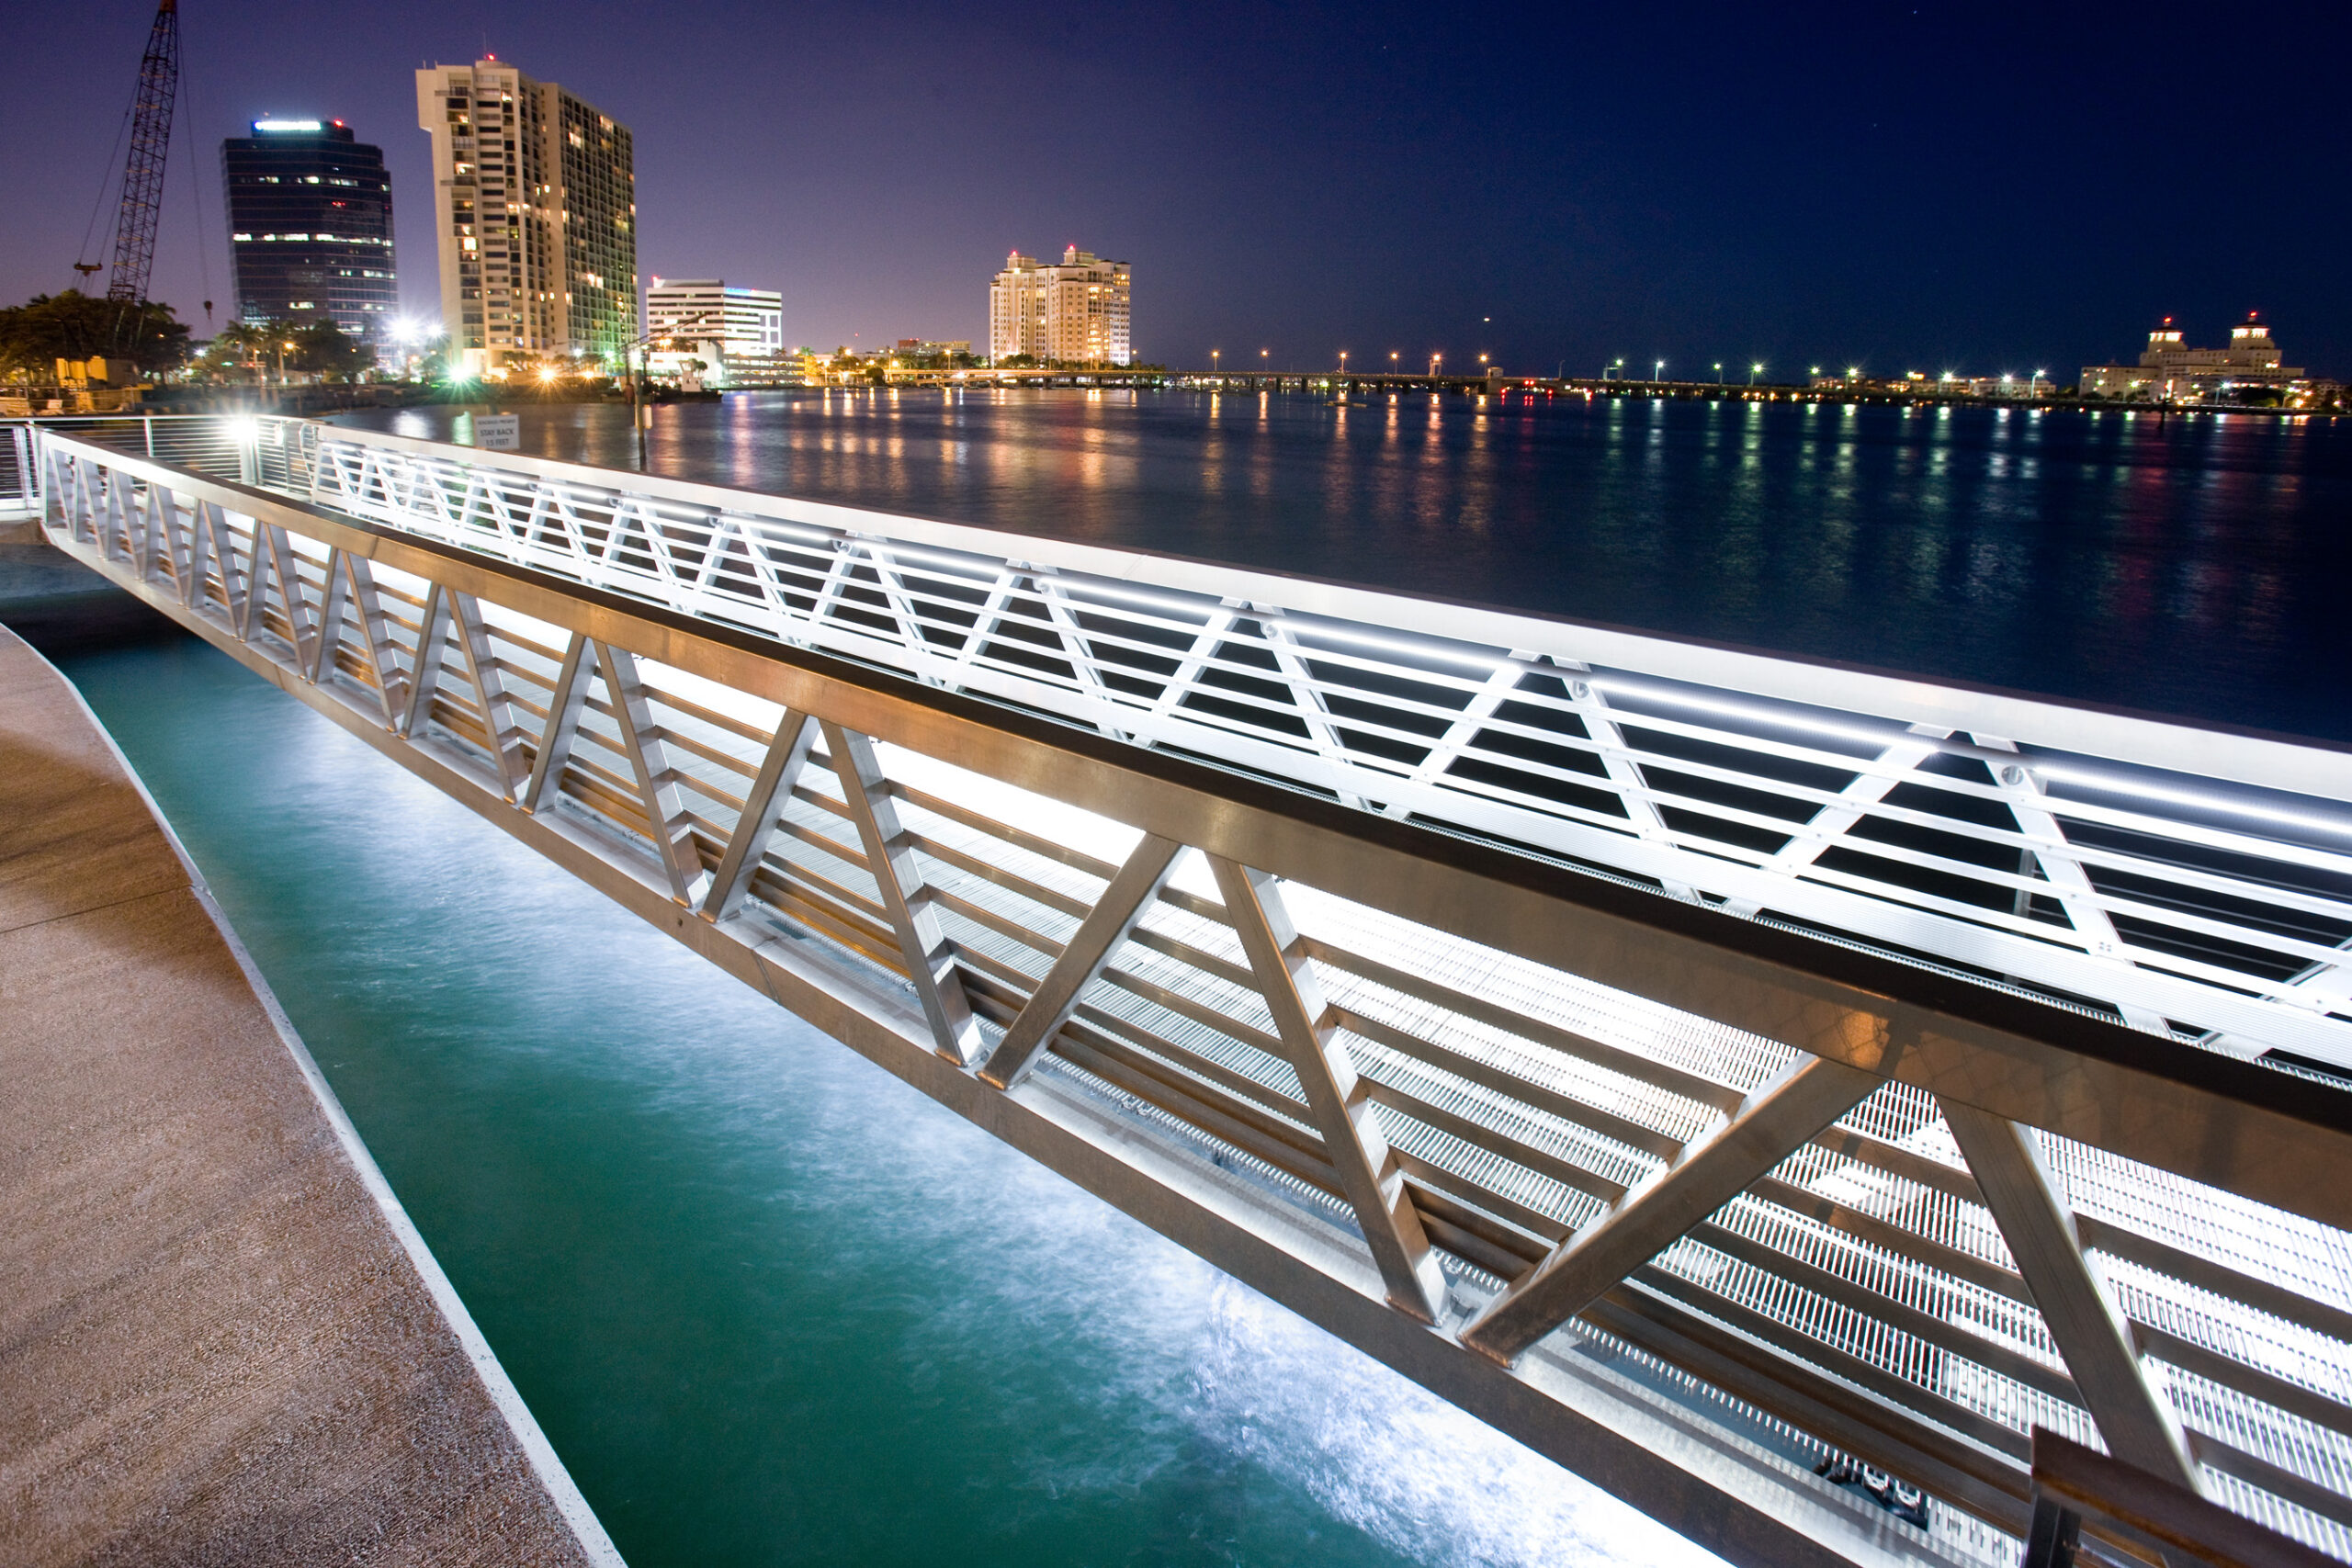 Illuminated custom aluminum gangway on urban public pier in Florida